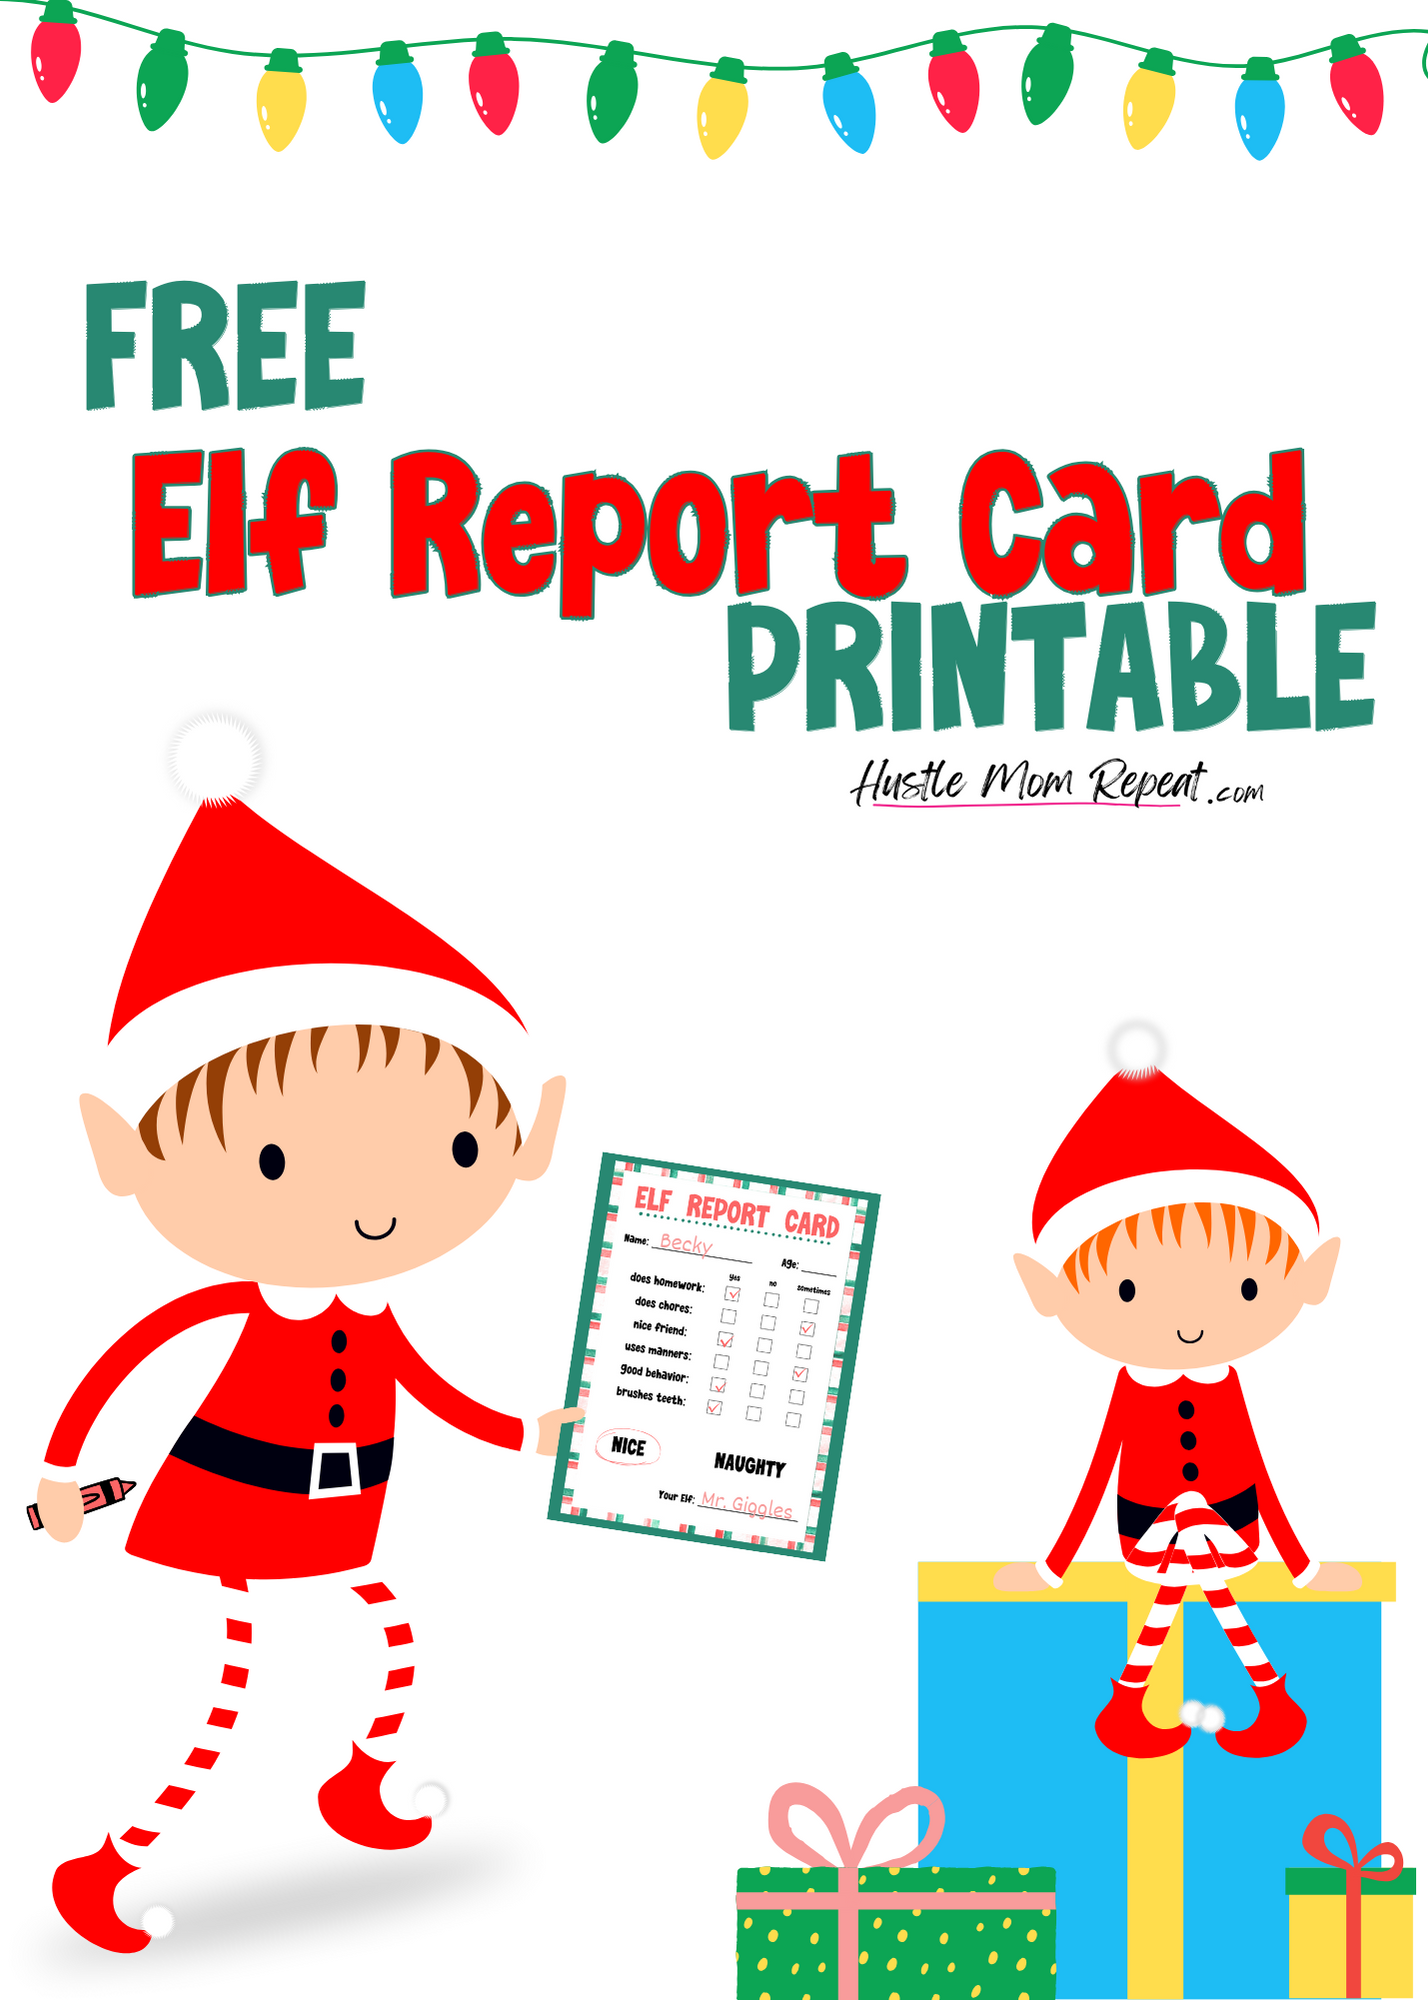 FREE Elf On The Shelf Report Card Printable Hustle Mom Repeat